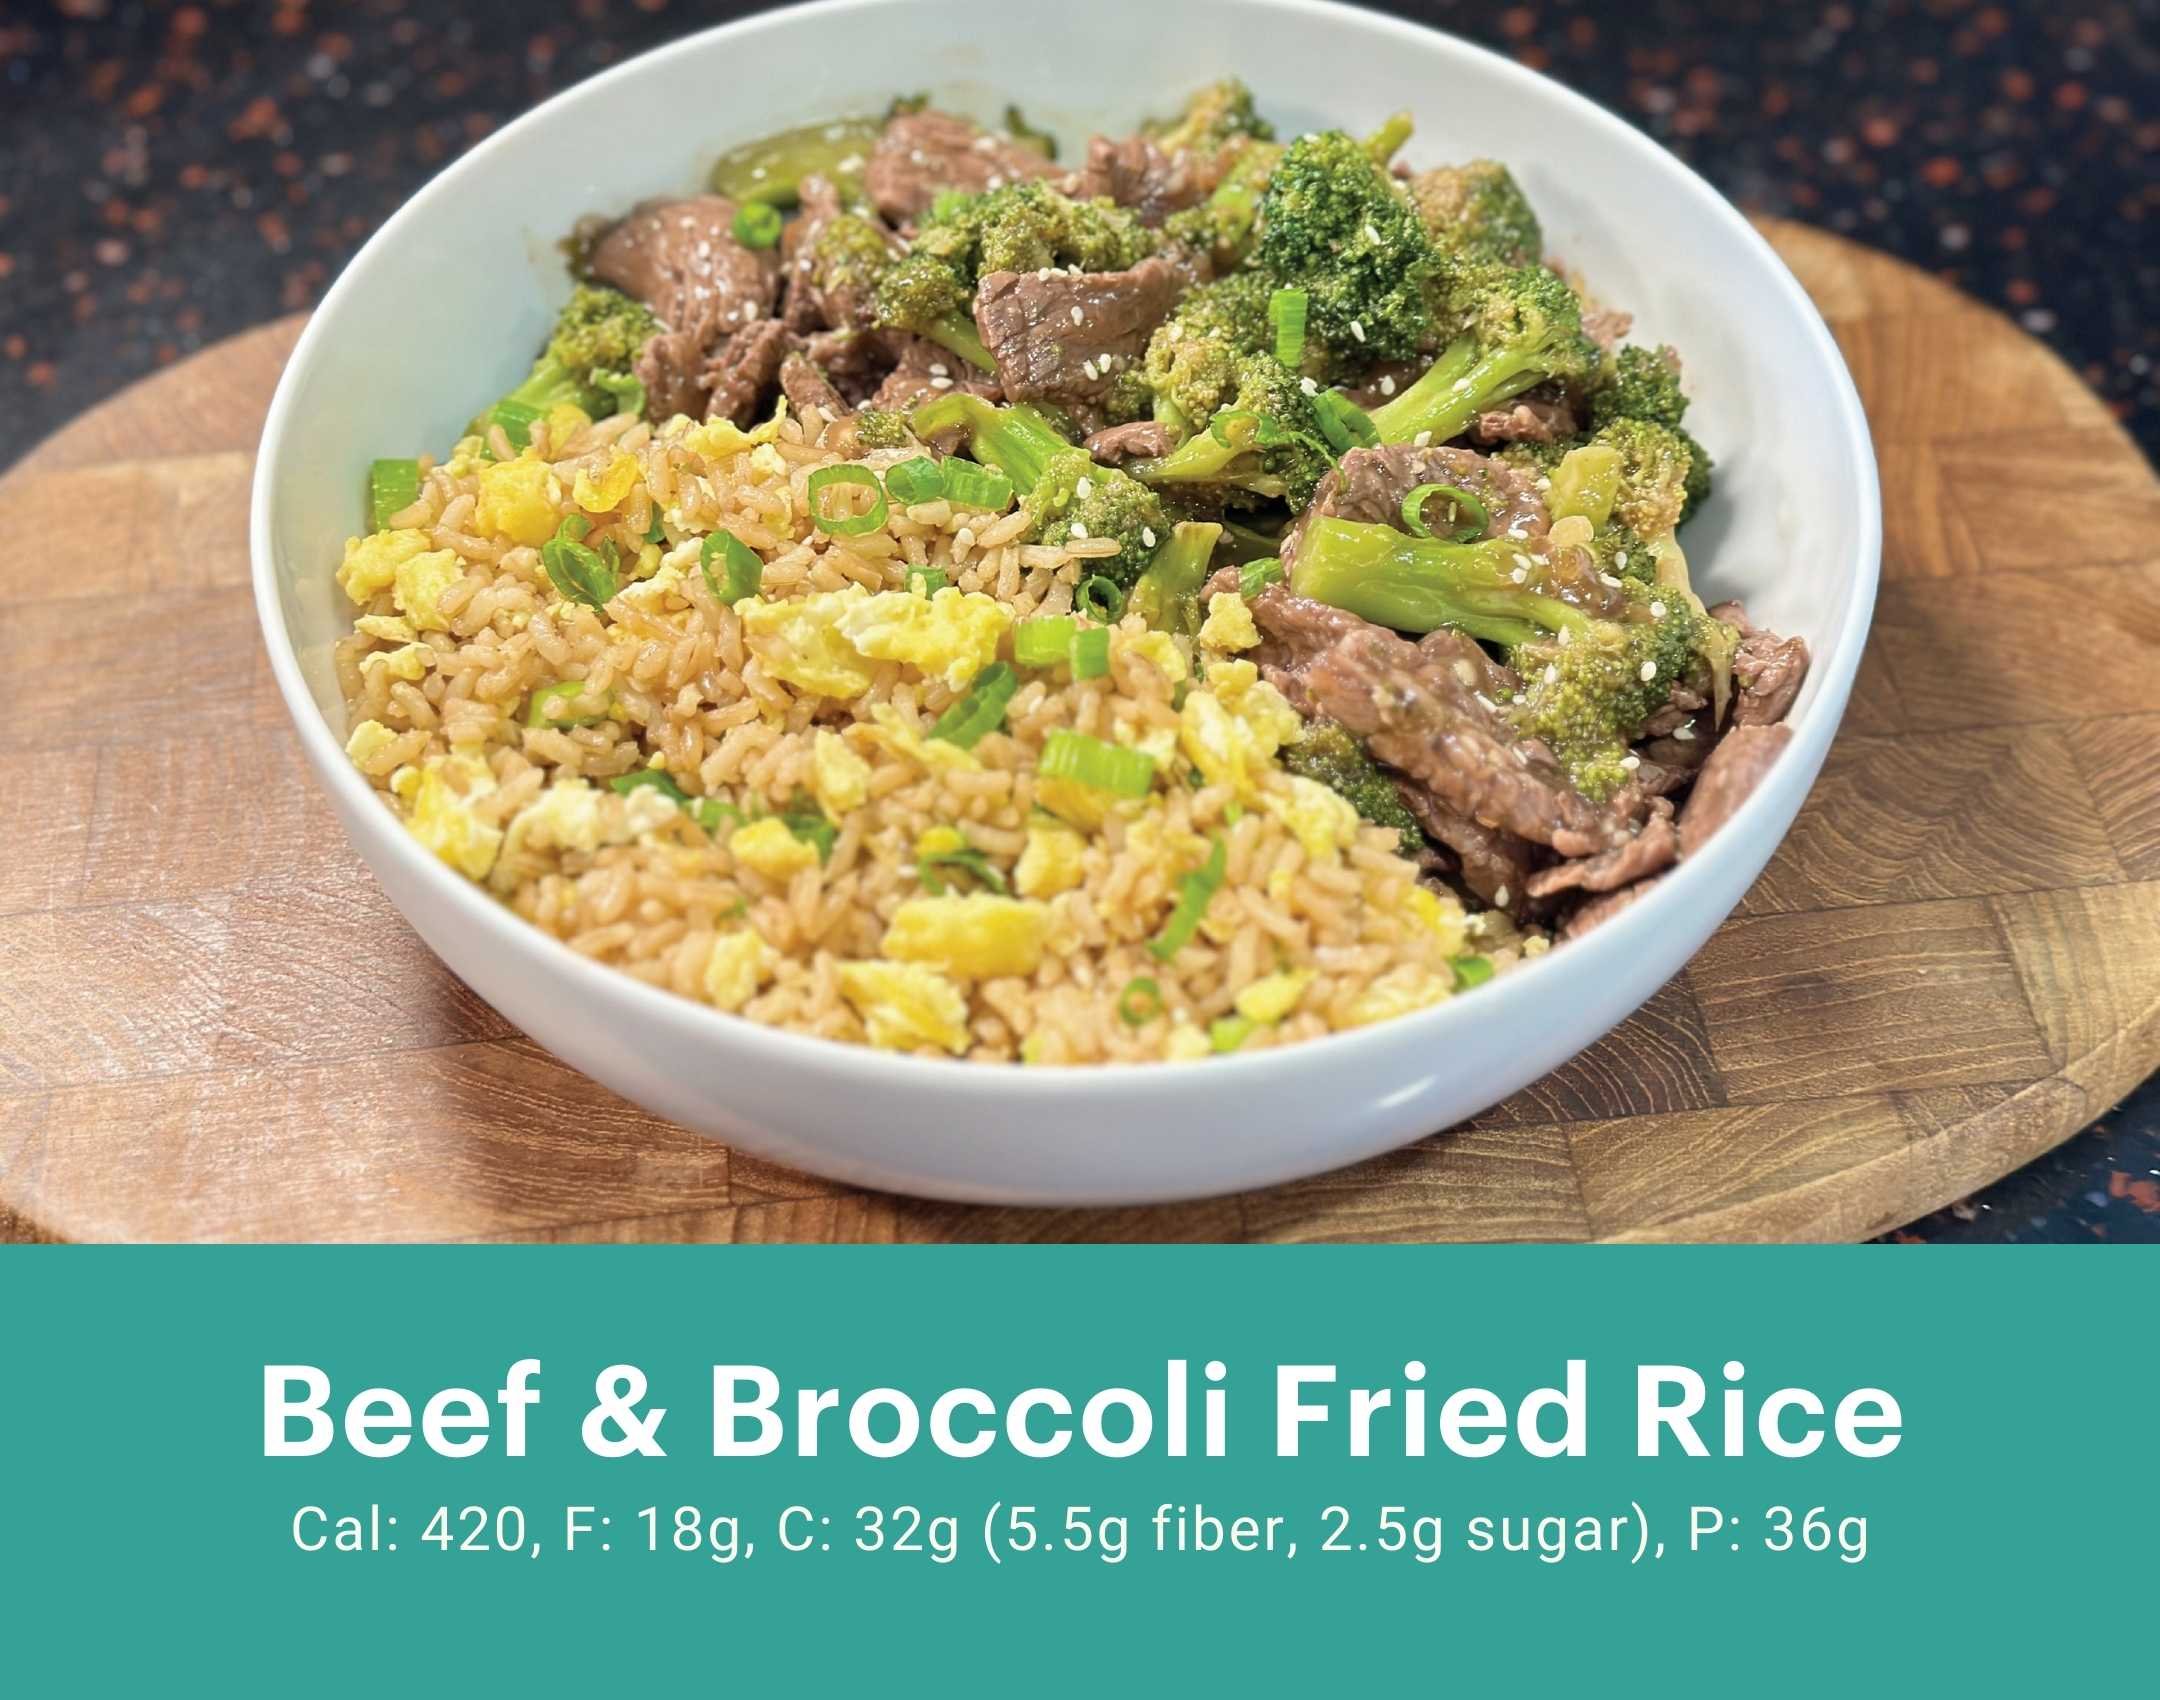 Beef & Broccoli Fried Rice.jpg